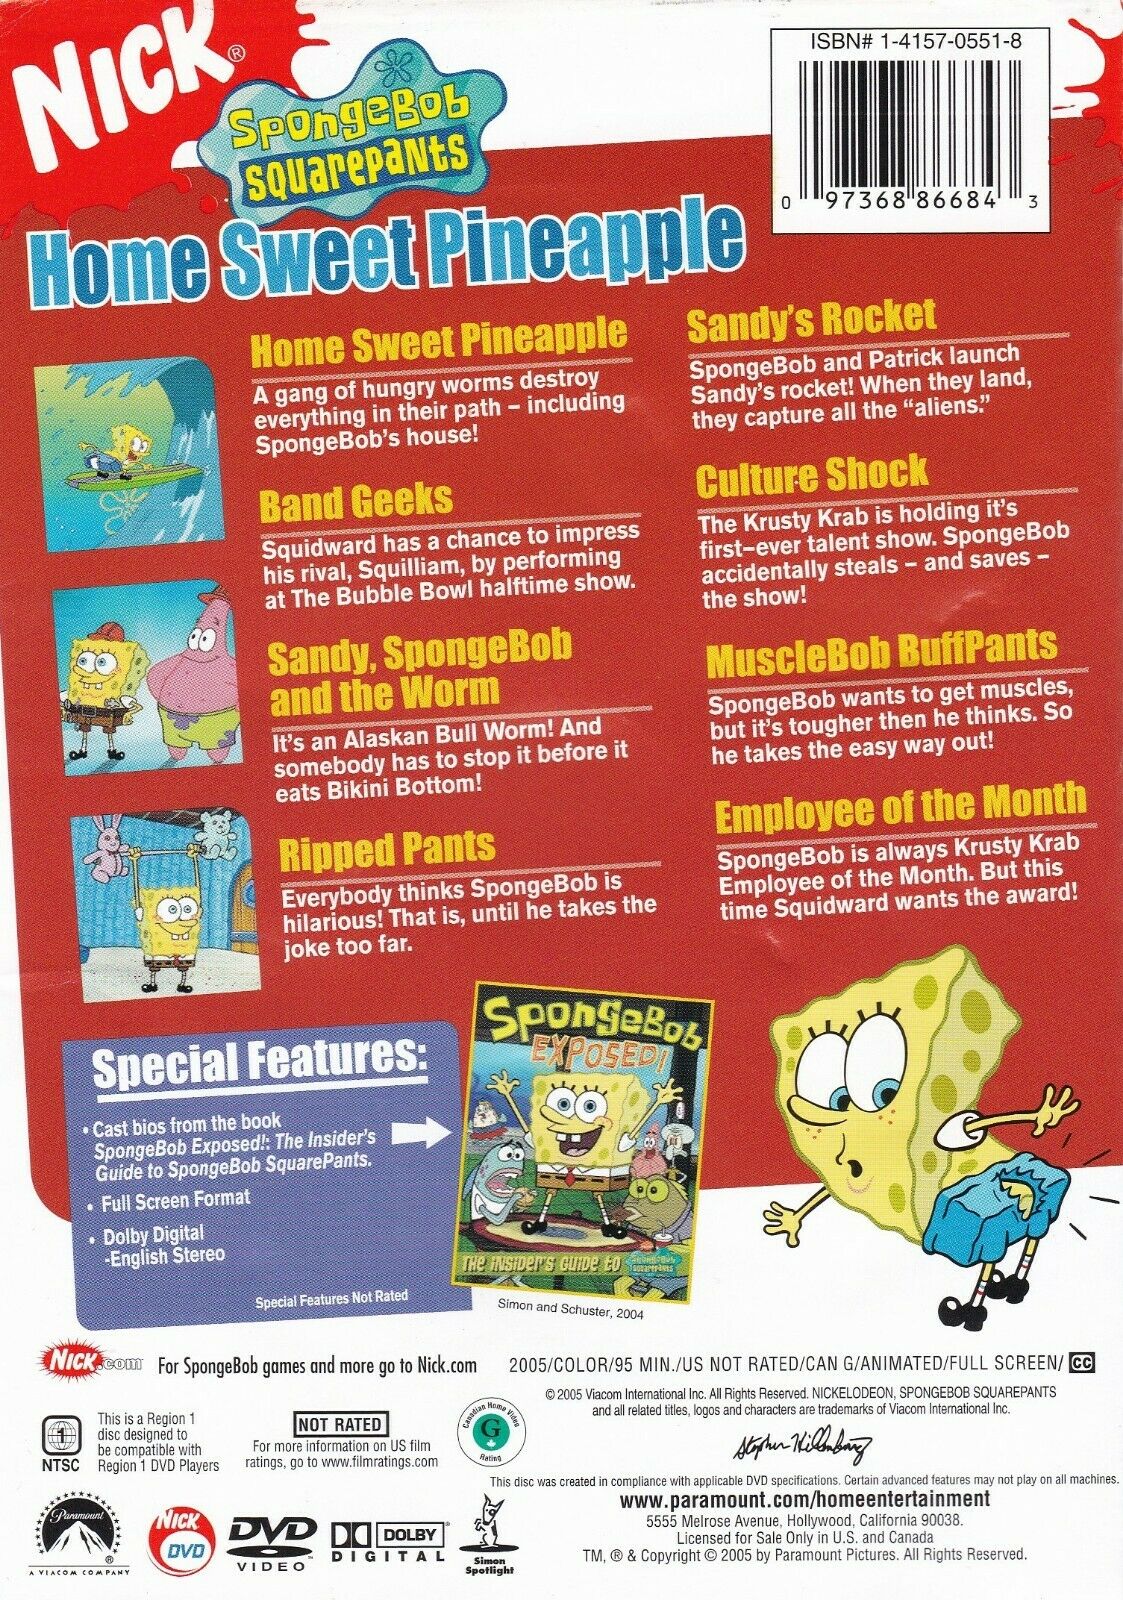 Home Sweet Pineapple (DVD) | Encyclopedia SpongeBobia | Fandom